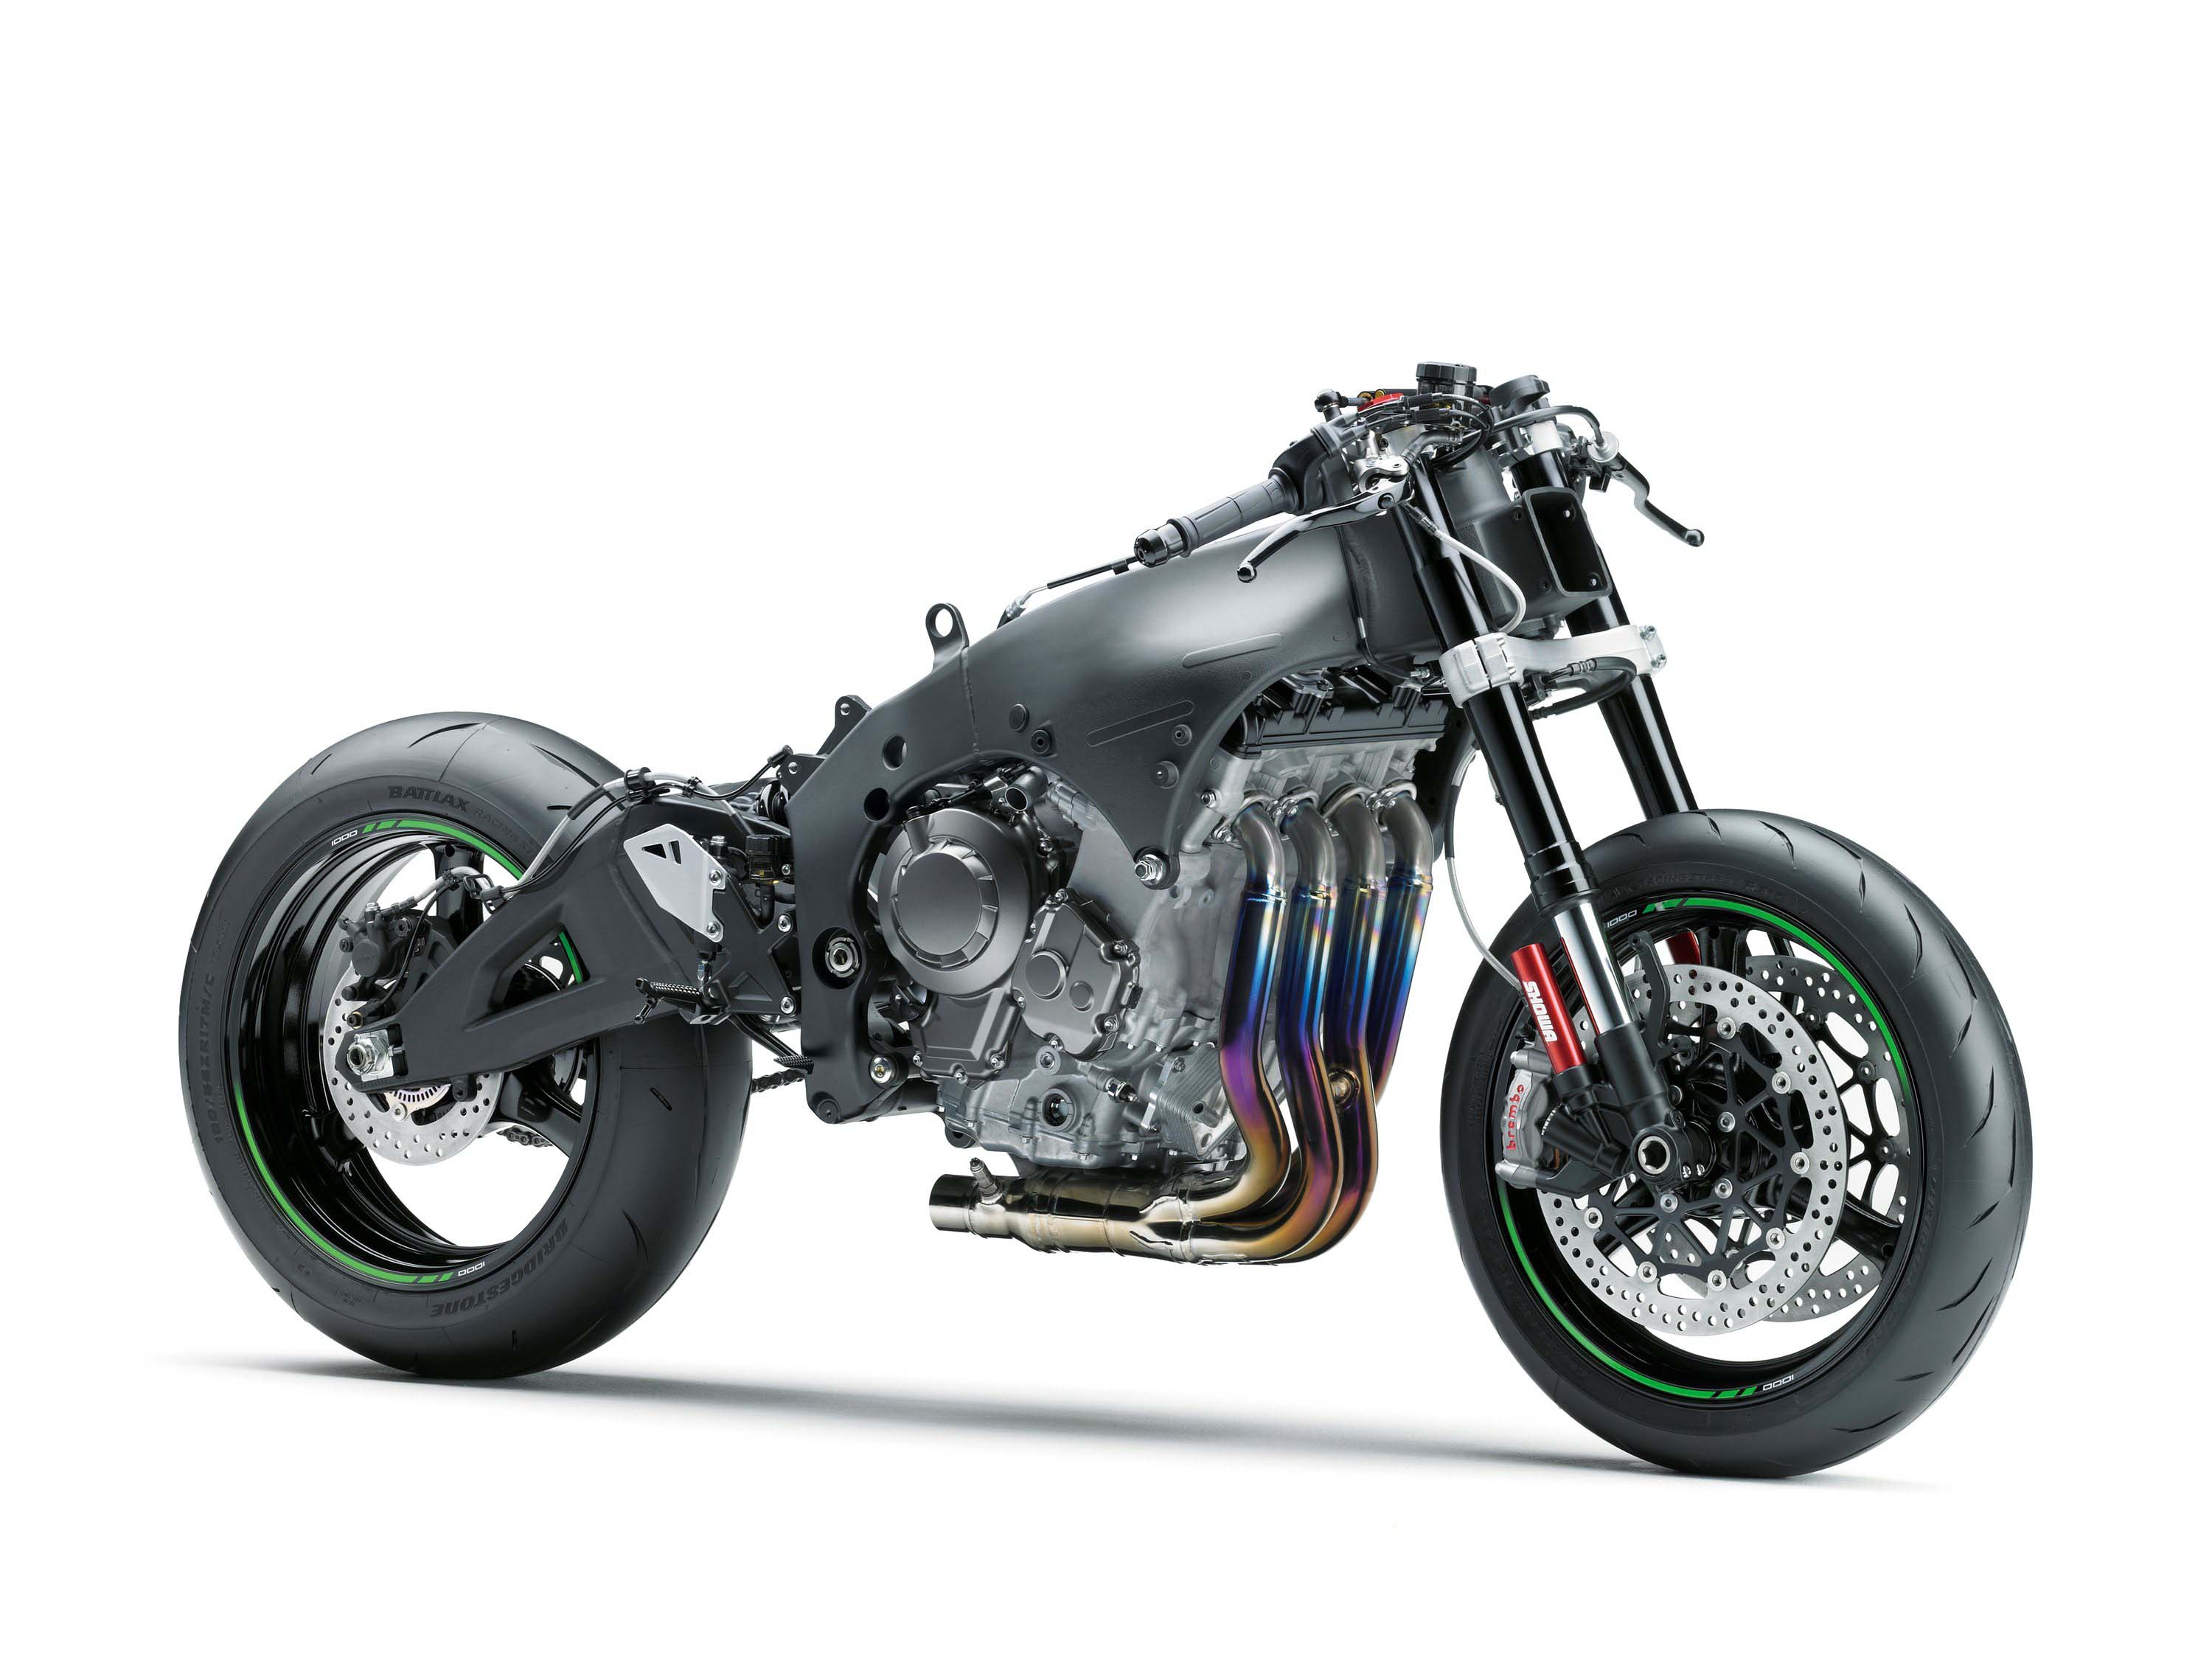 New Kawasaki Ninja ZX-10R racing parts catalogue released - Motorcycle ...